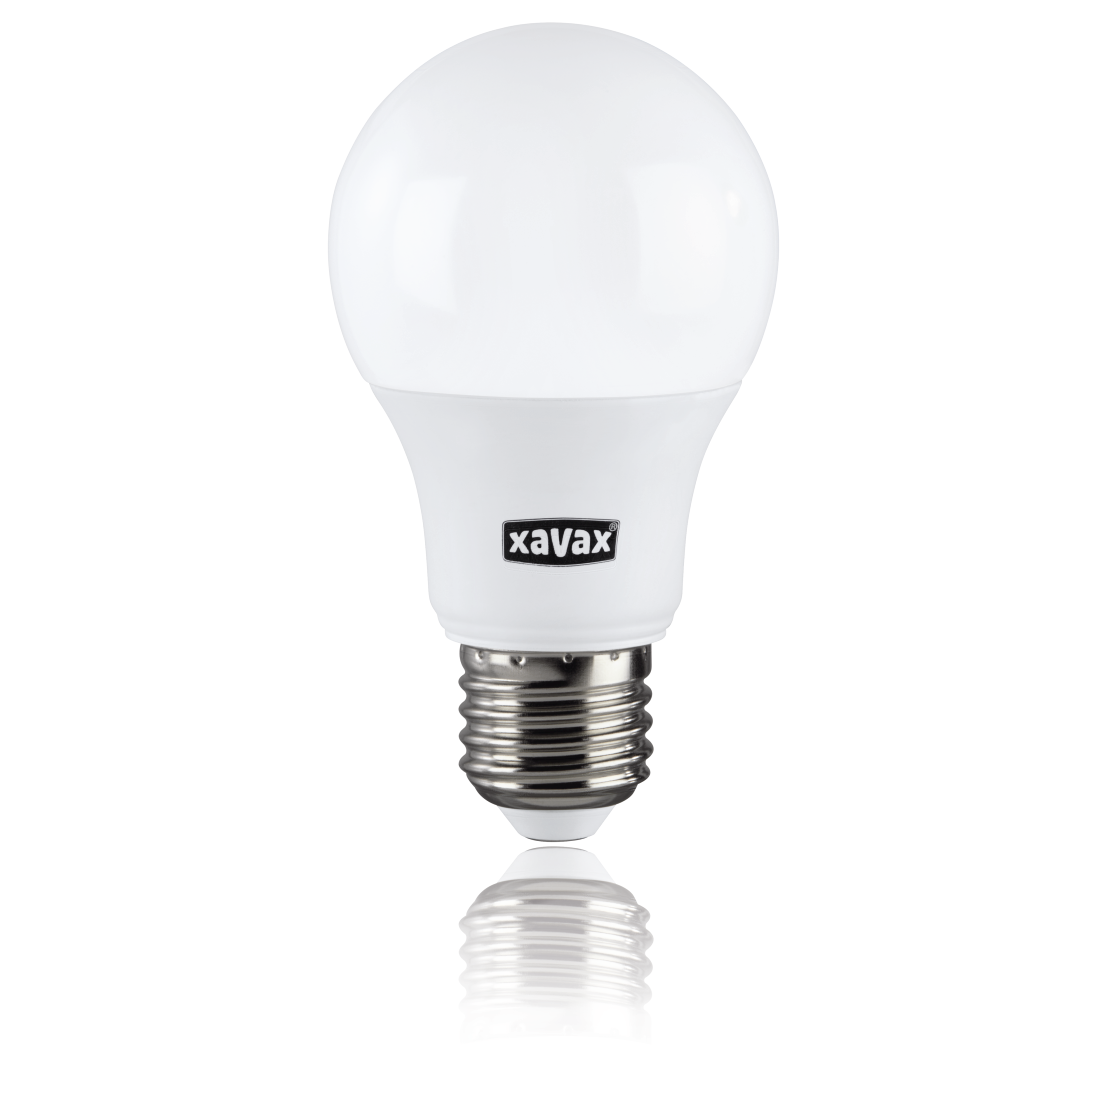 abx2 Druckfähige Abbildung 2 - Xavax, LED-Lampe, E27, 470lm ersetzt 40W, Glühlampe, Warmweiß, RA90